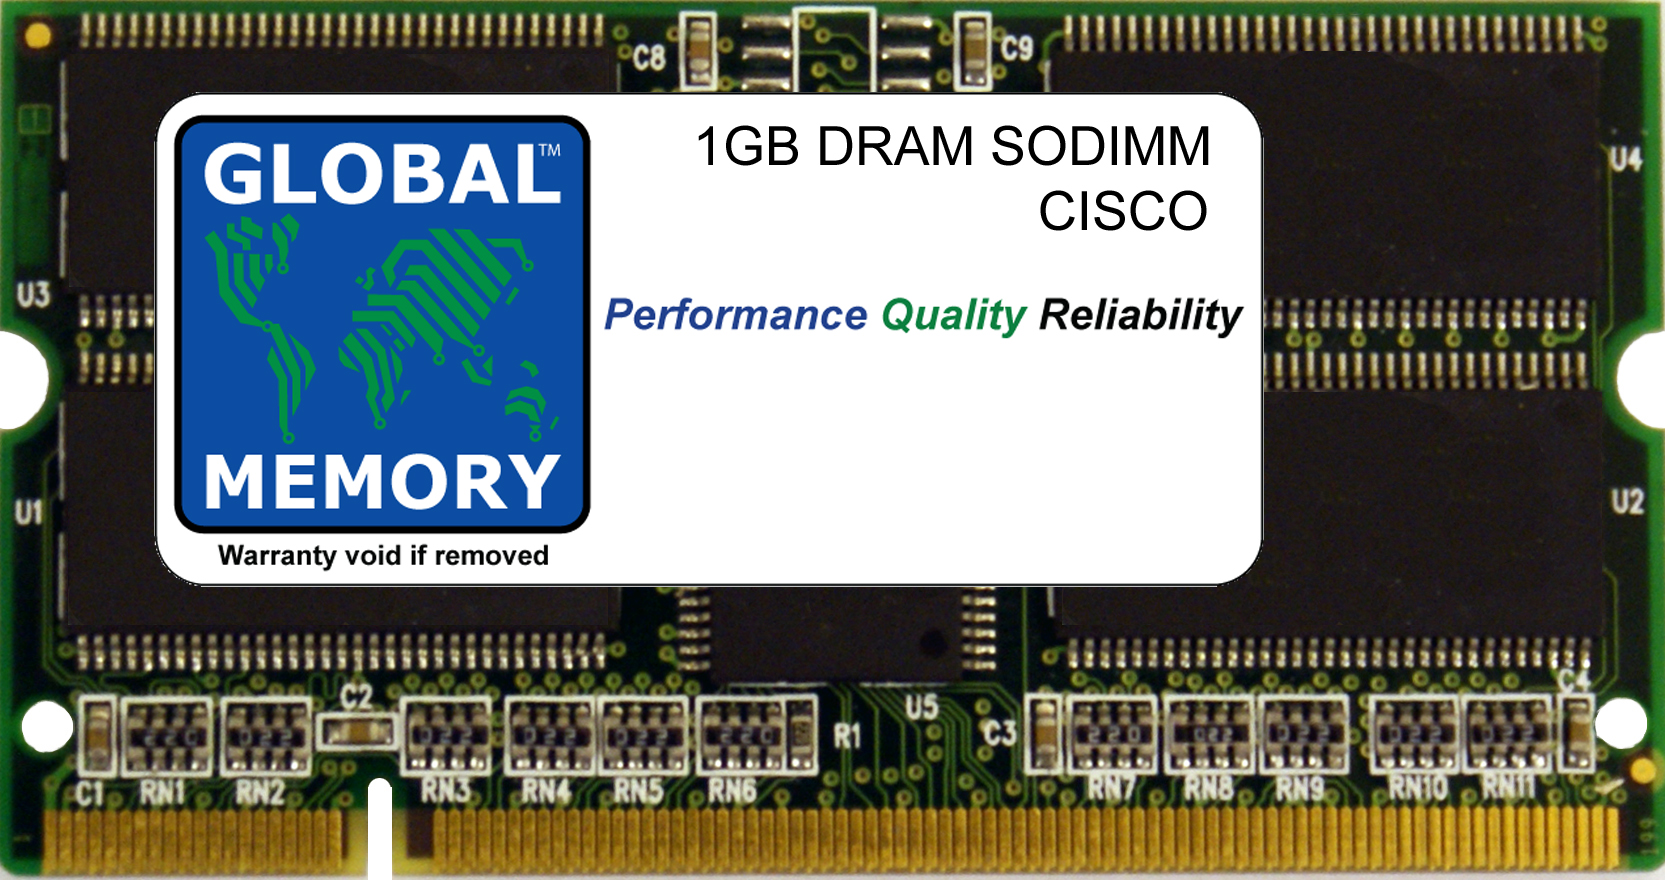 1GB DRAM SODIMM MEMORY RAM FOR CISCO CATALYST 6500 SERIES SWITCHES DISTRIBUTED FORWARDING CARD 3A (MEM-XCEF720-1GB)